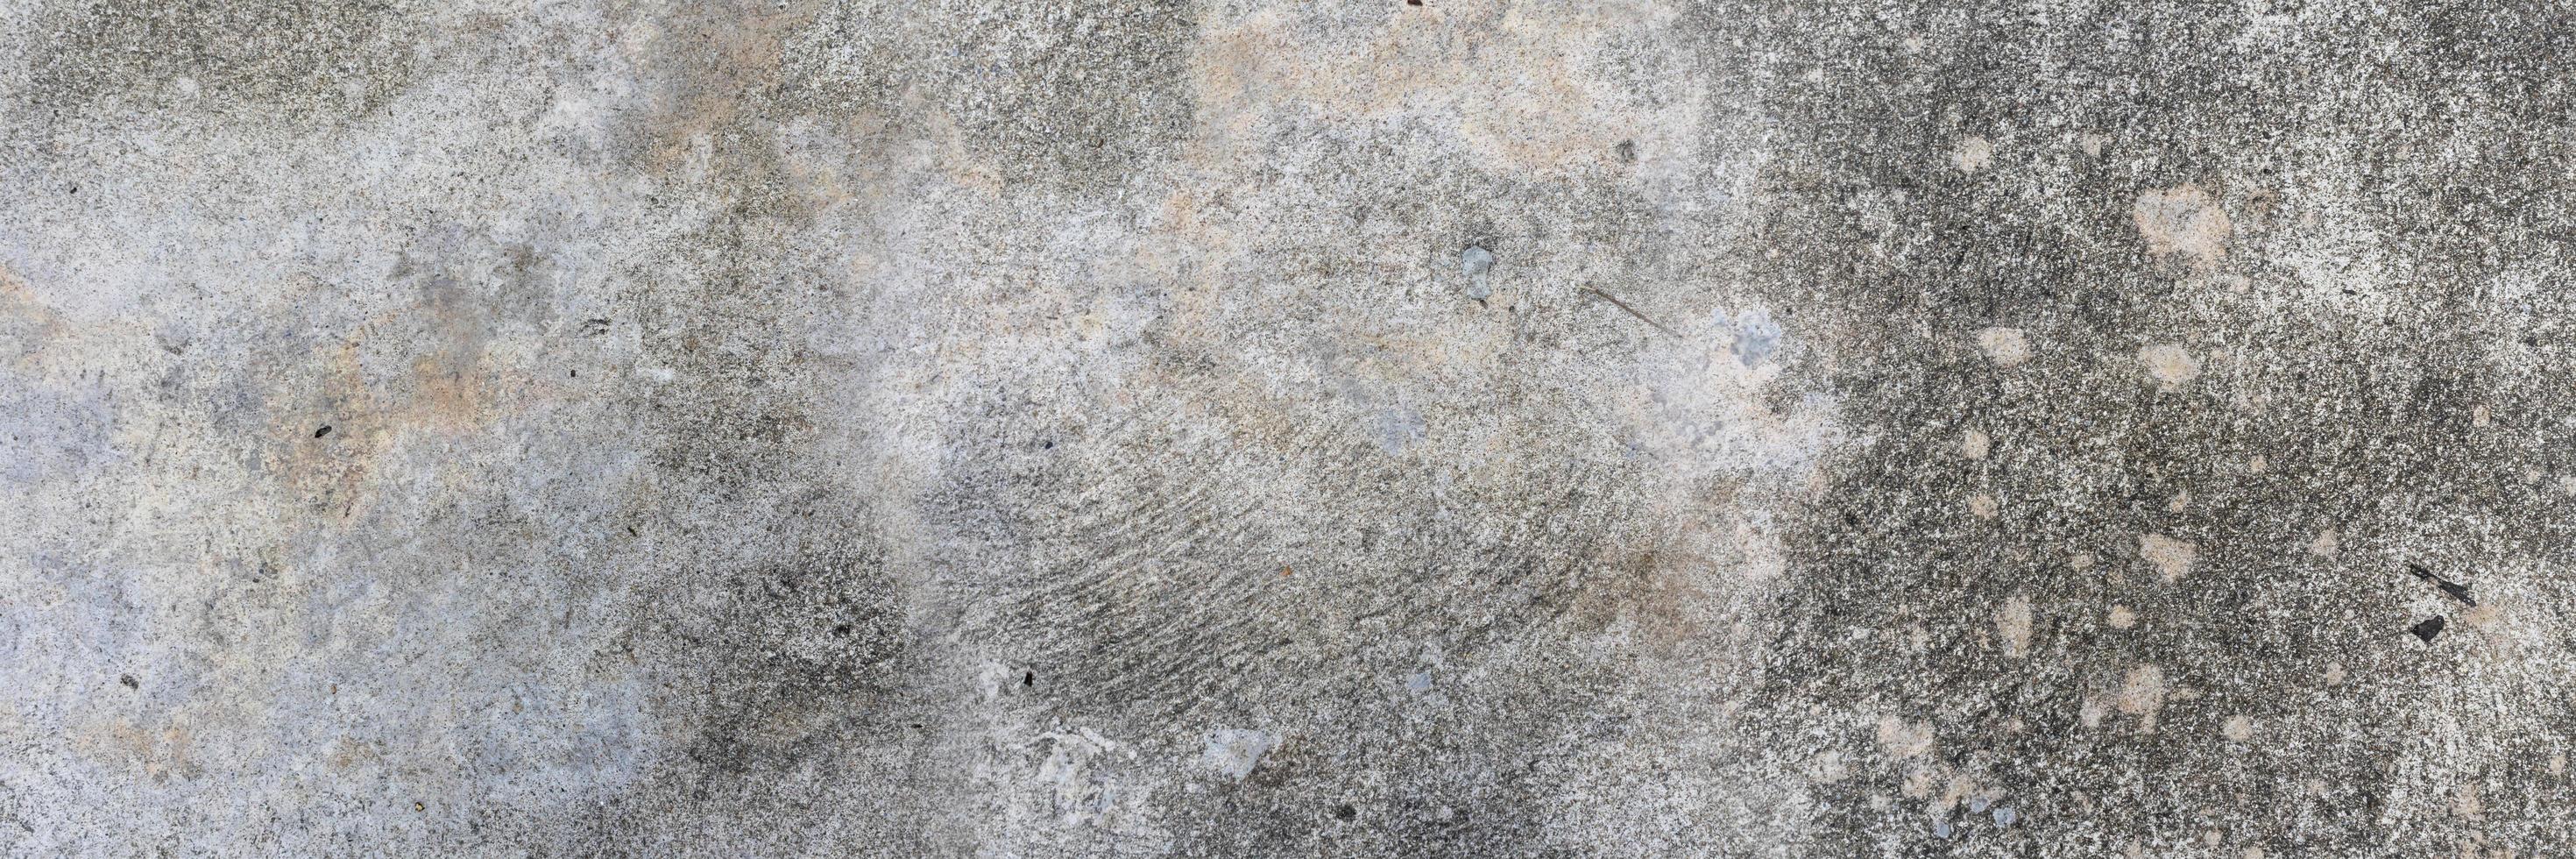 fundo de parede de concreto com textura dura, textura de fundo abstrato. foto